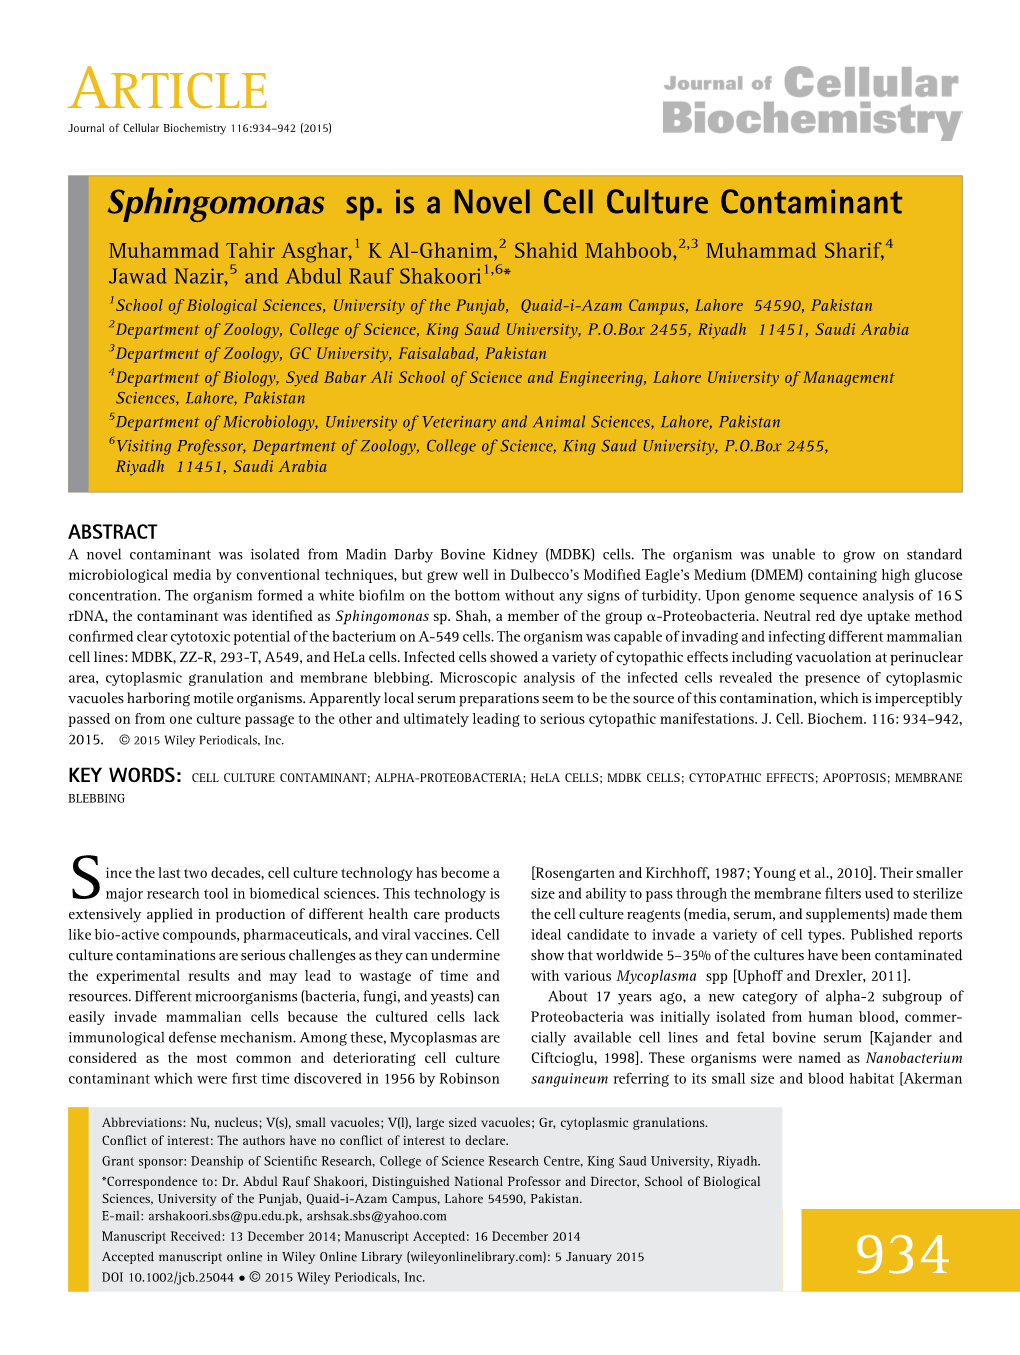 Sphingomonas Sp. Is a Novel Cell Culture Contaminant